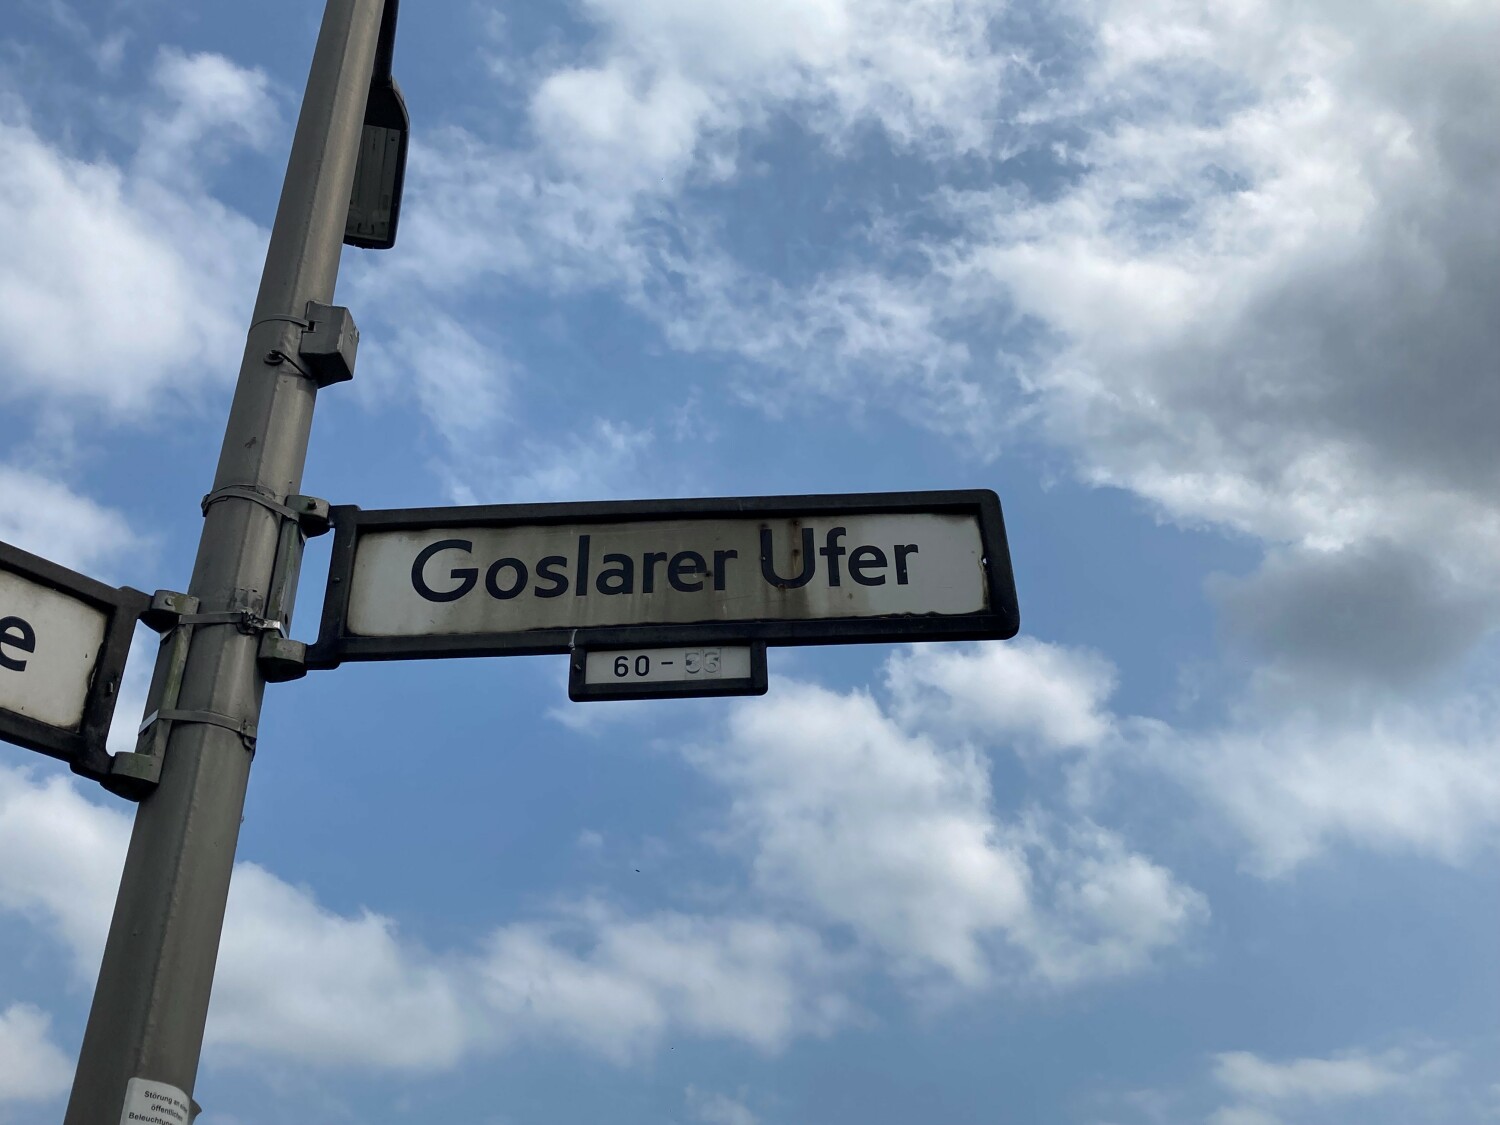 Goslarer Ufer